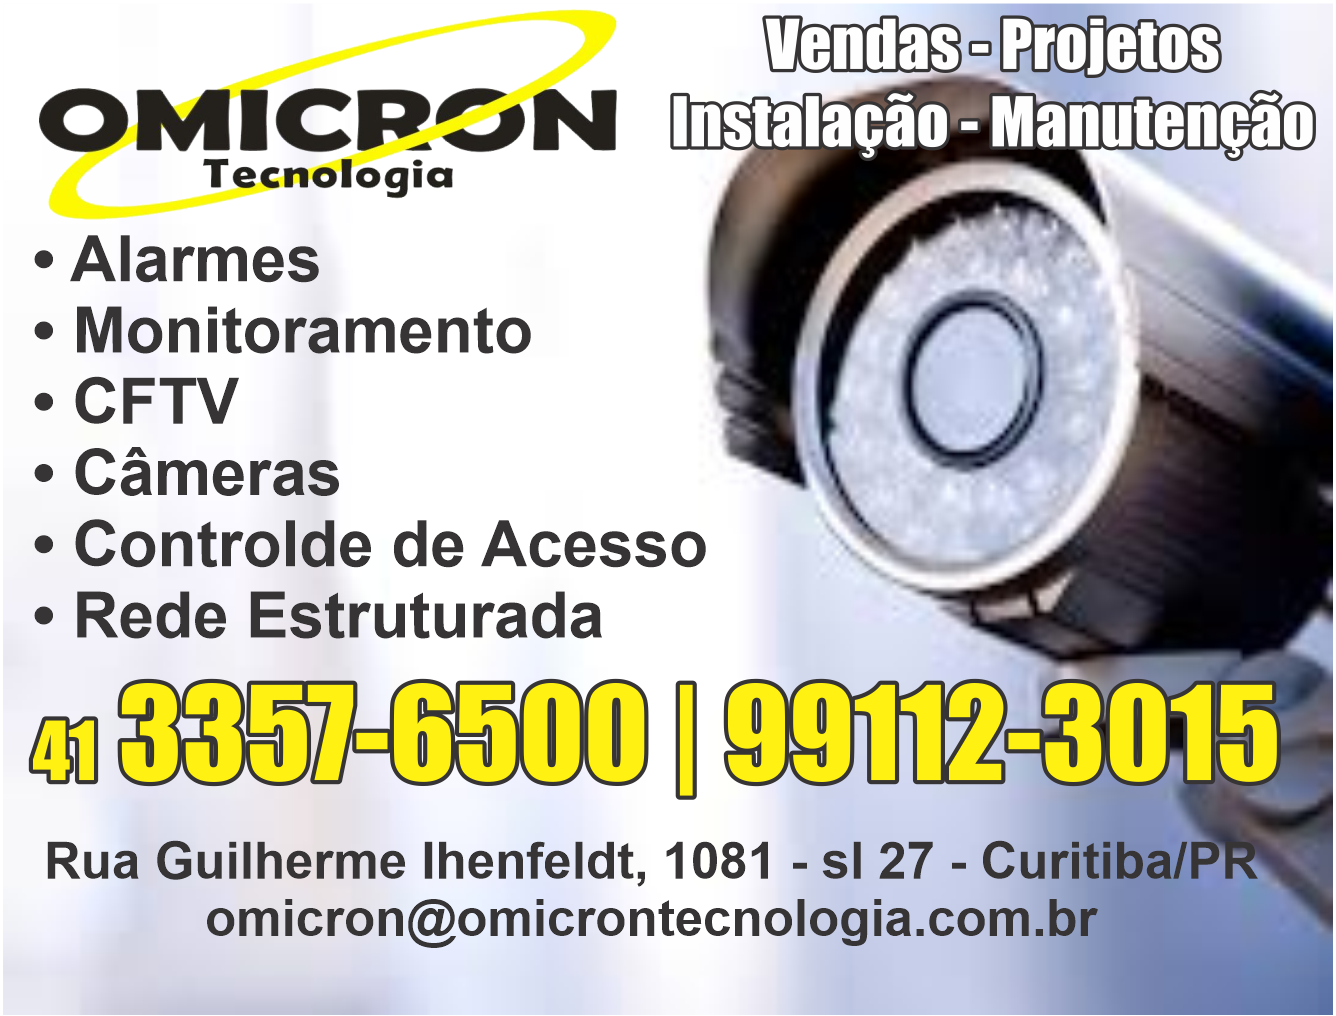 Omicron Tecnologia      Fones: (41)3357-6500 / (41) 99112-3015